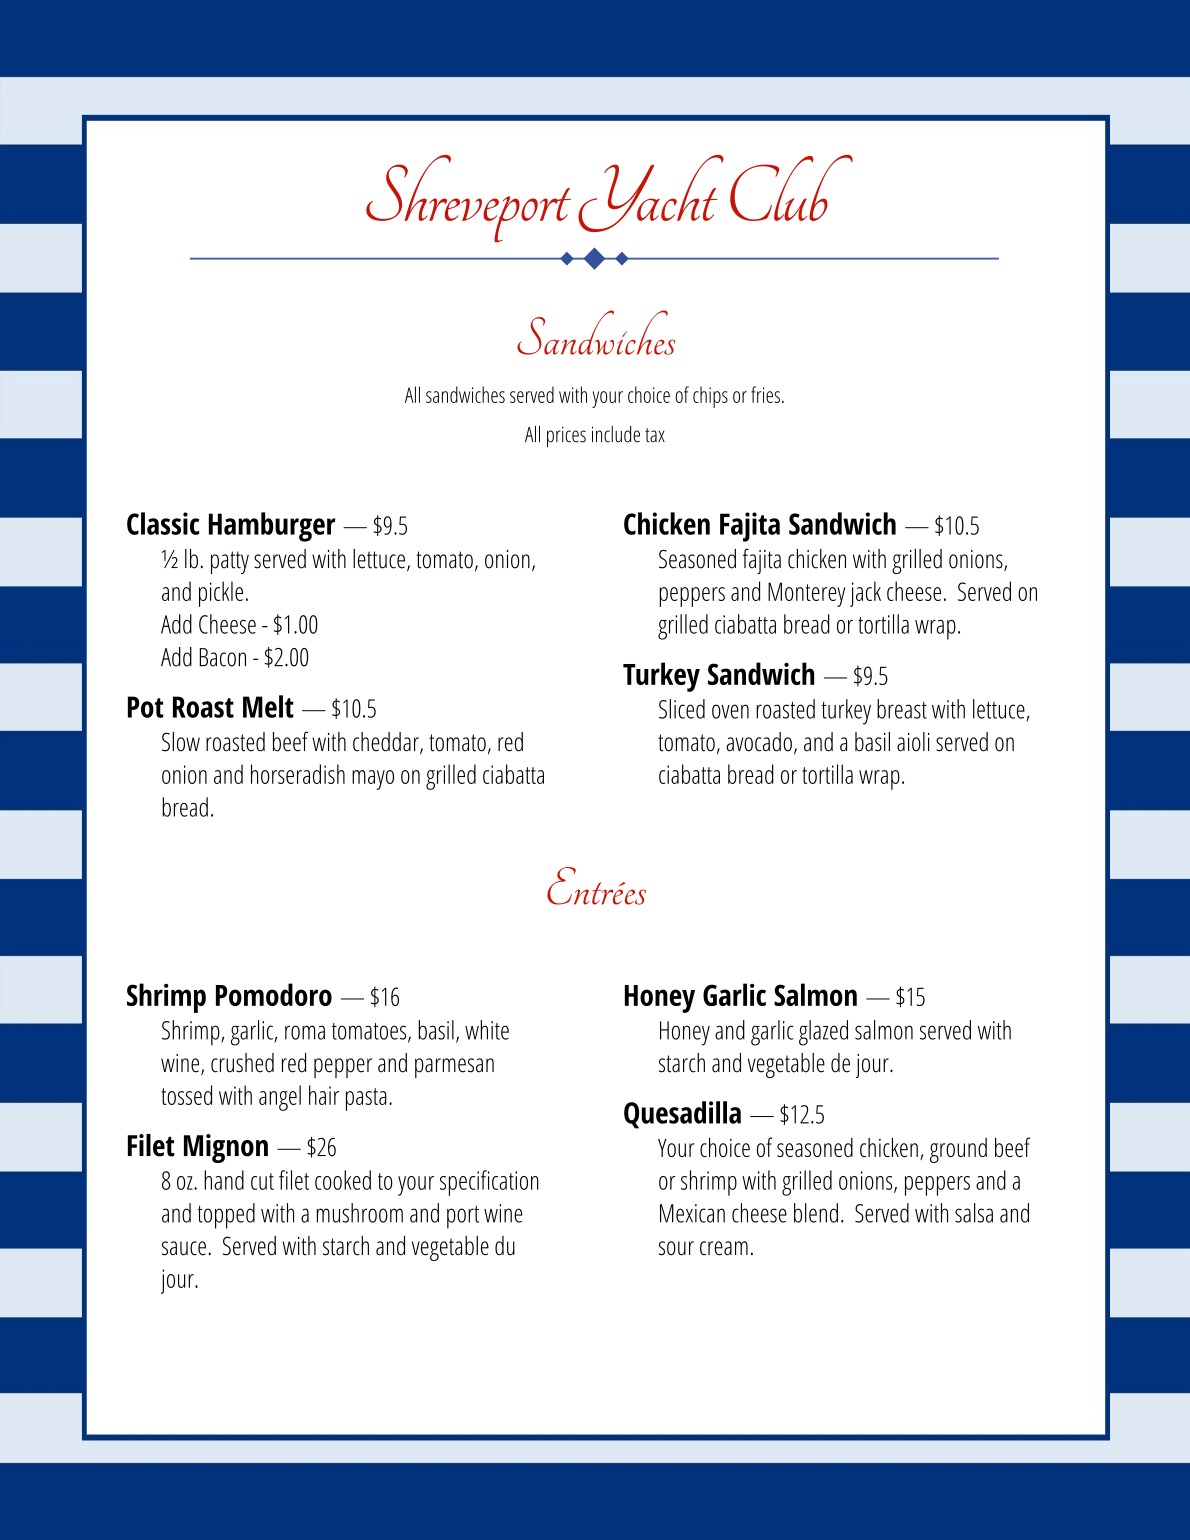 sf yacht club menu